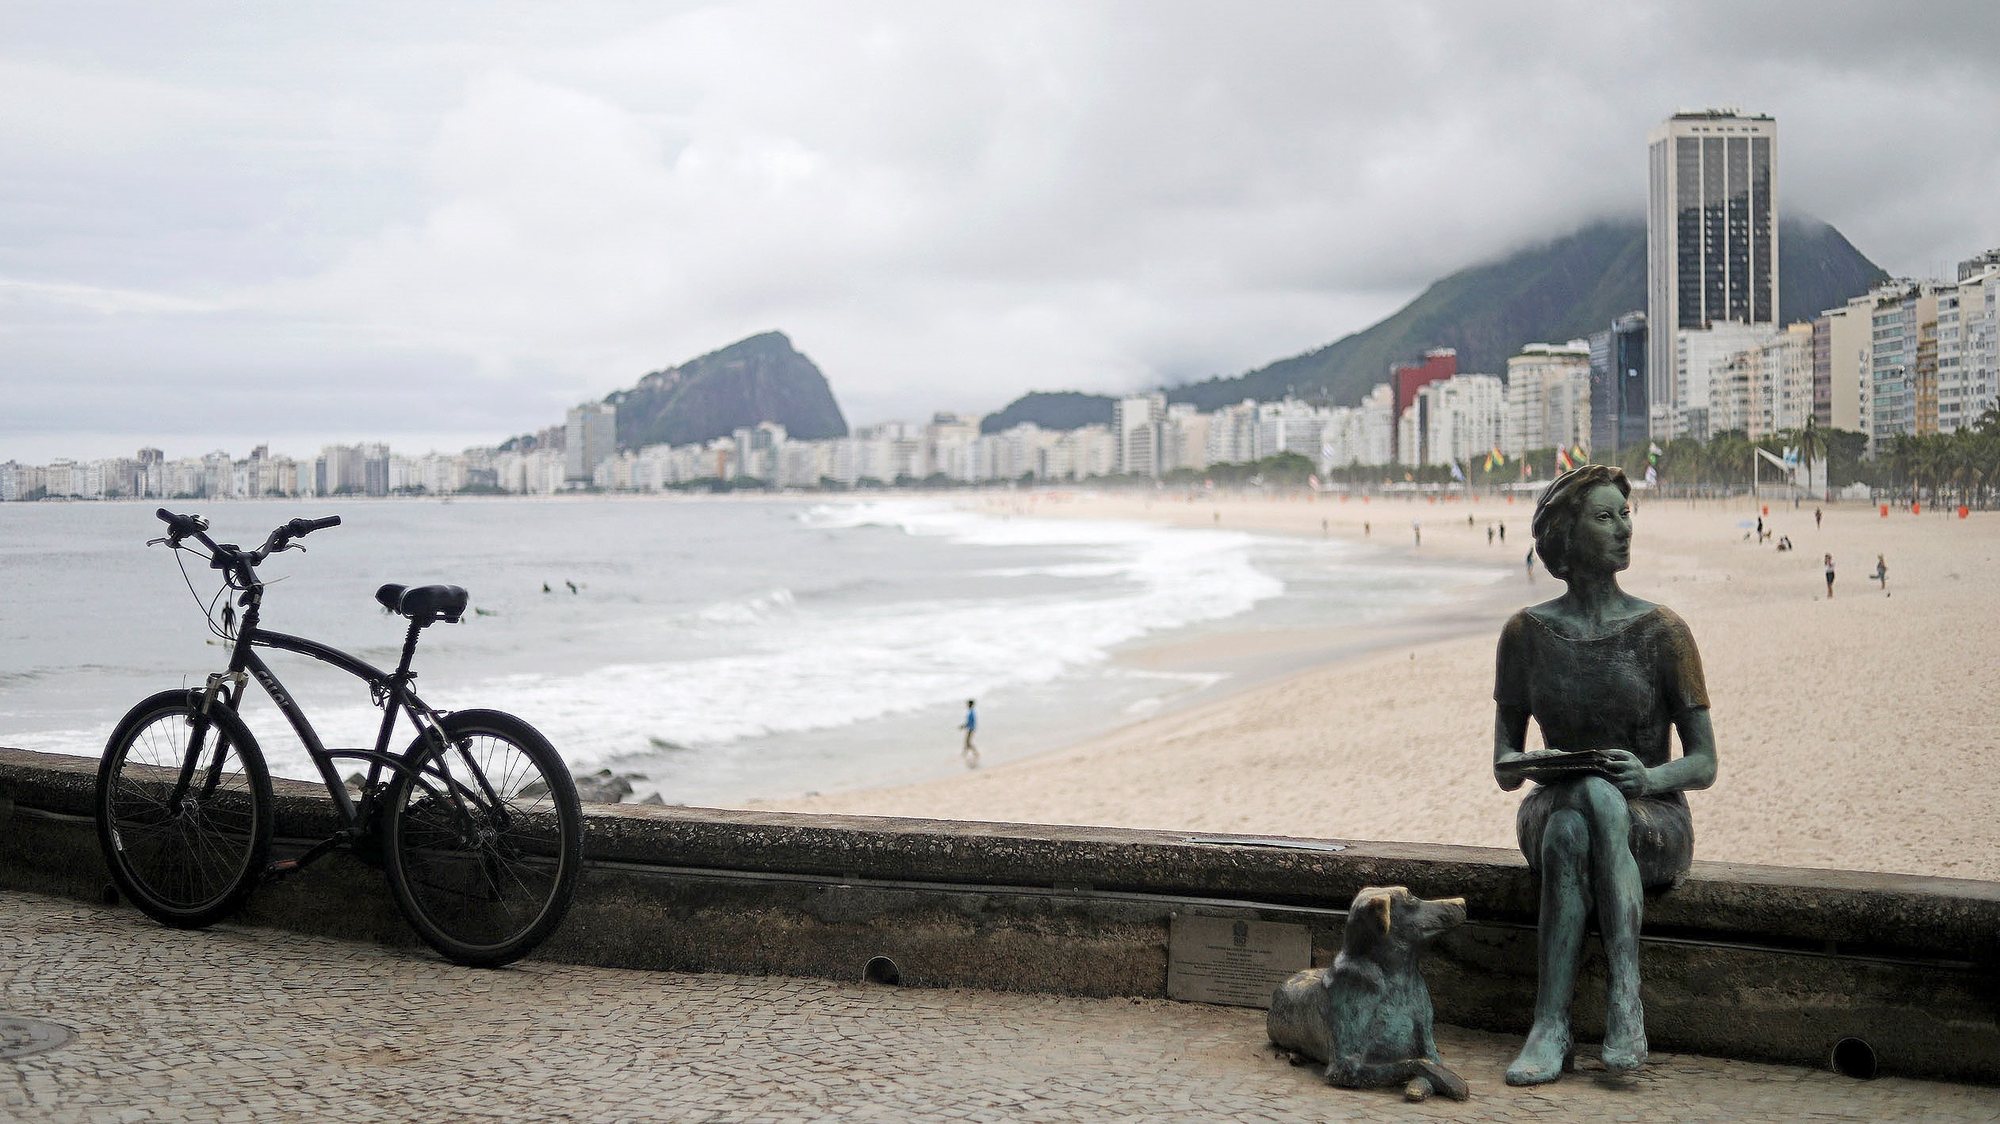 Estátua da escritora ucraniana/brasileira, Clarice Lispector, na praia leme no Rio de Janeiro, Brazil, 10 de dezembro 2020. EPA/FABIO MOTTA